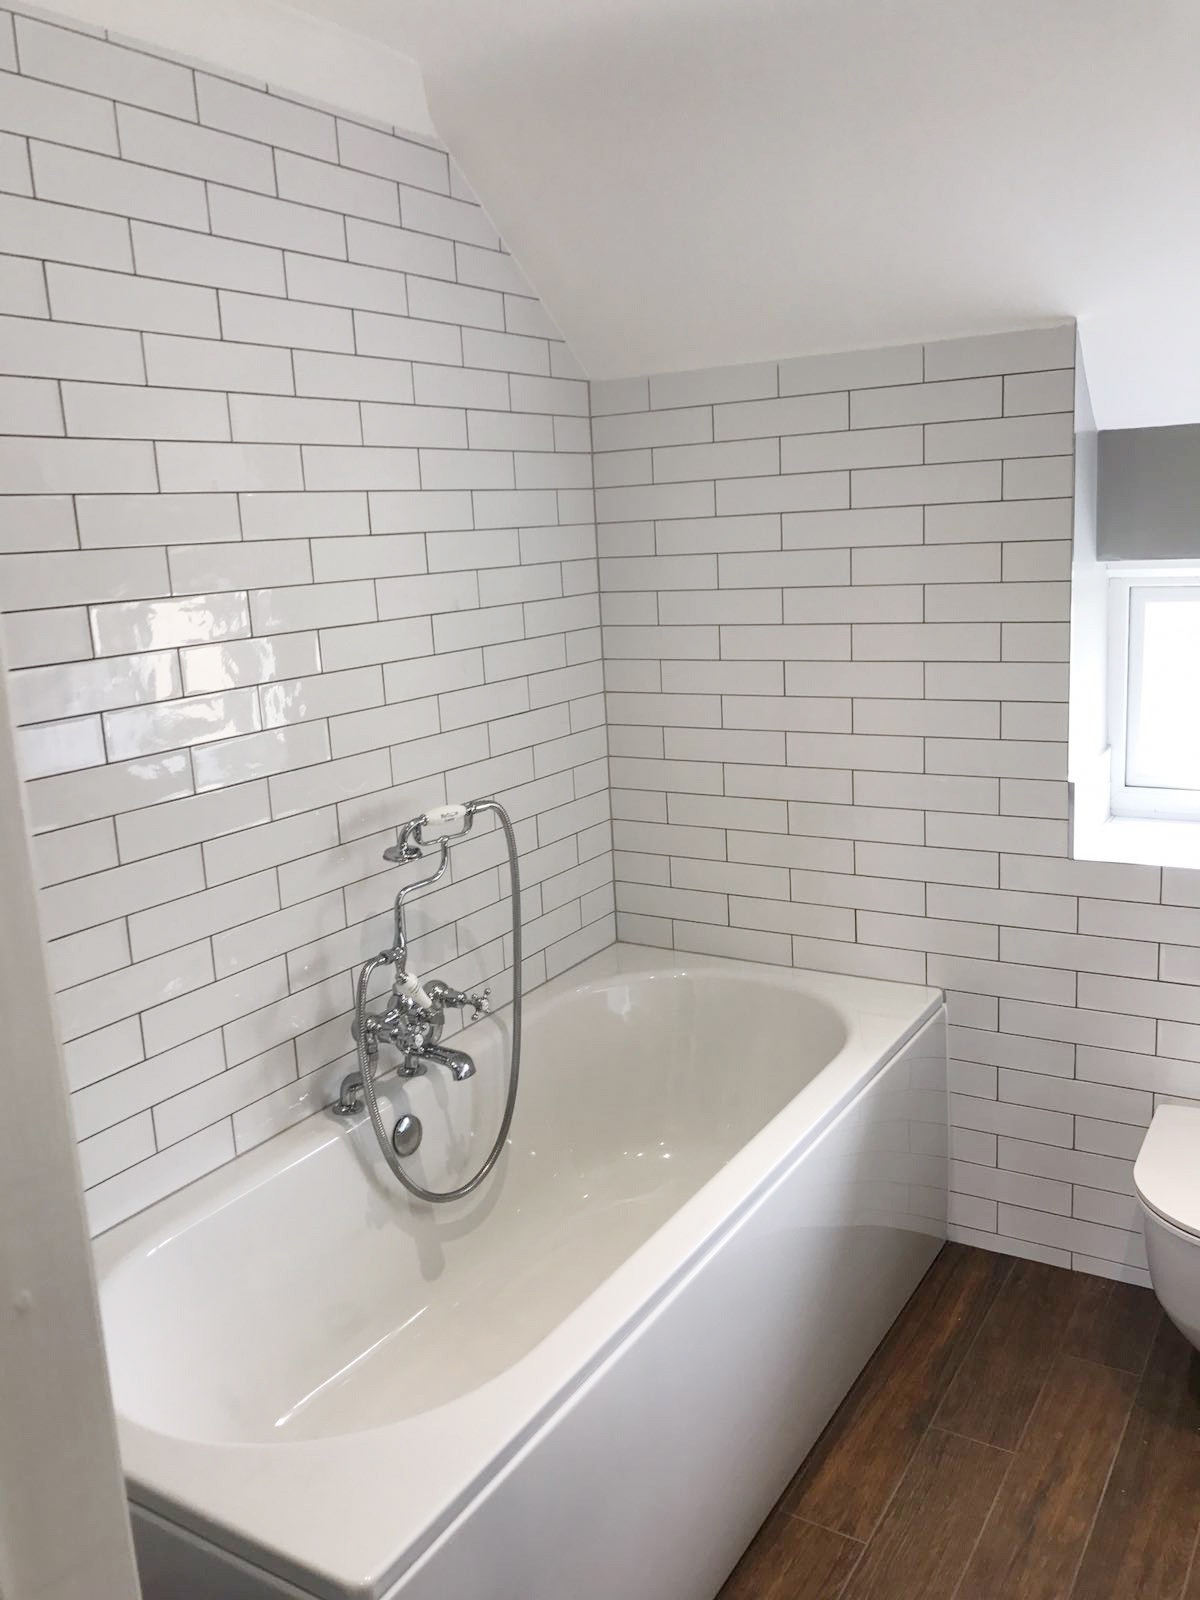 Brick Tile Bathroom
 Gloss white brick bathroom